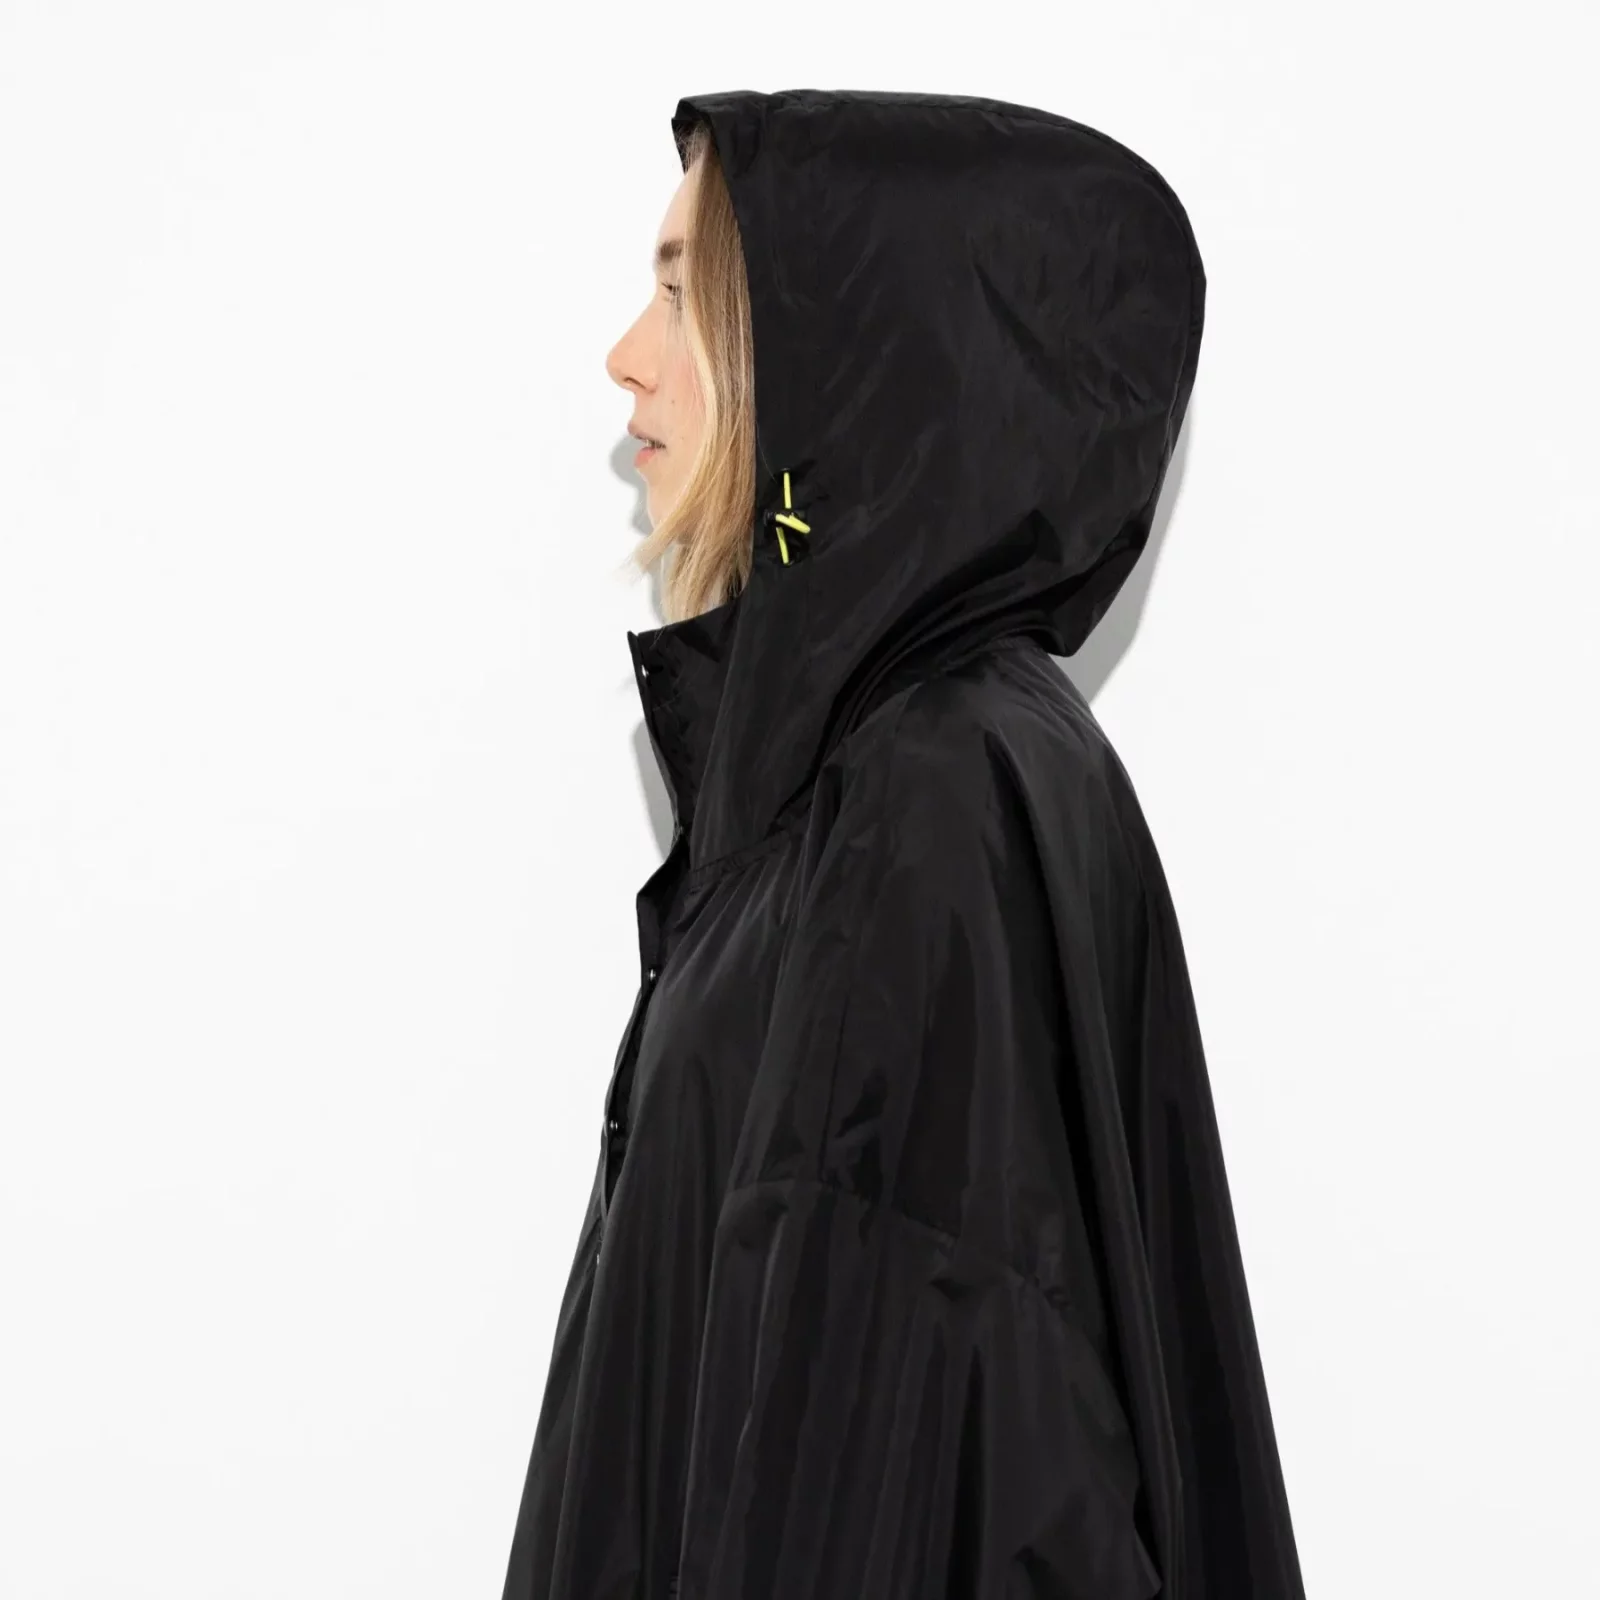 VIVI MARI - Raincoat solid black 7